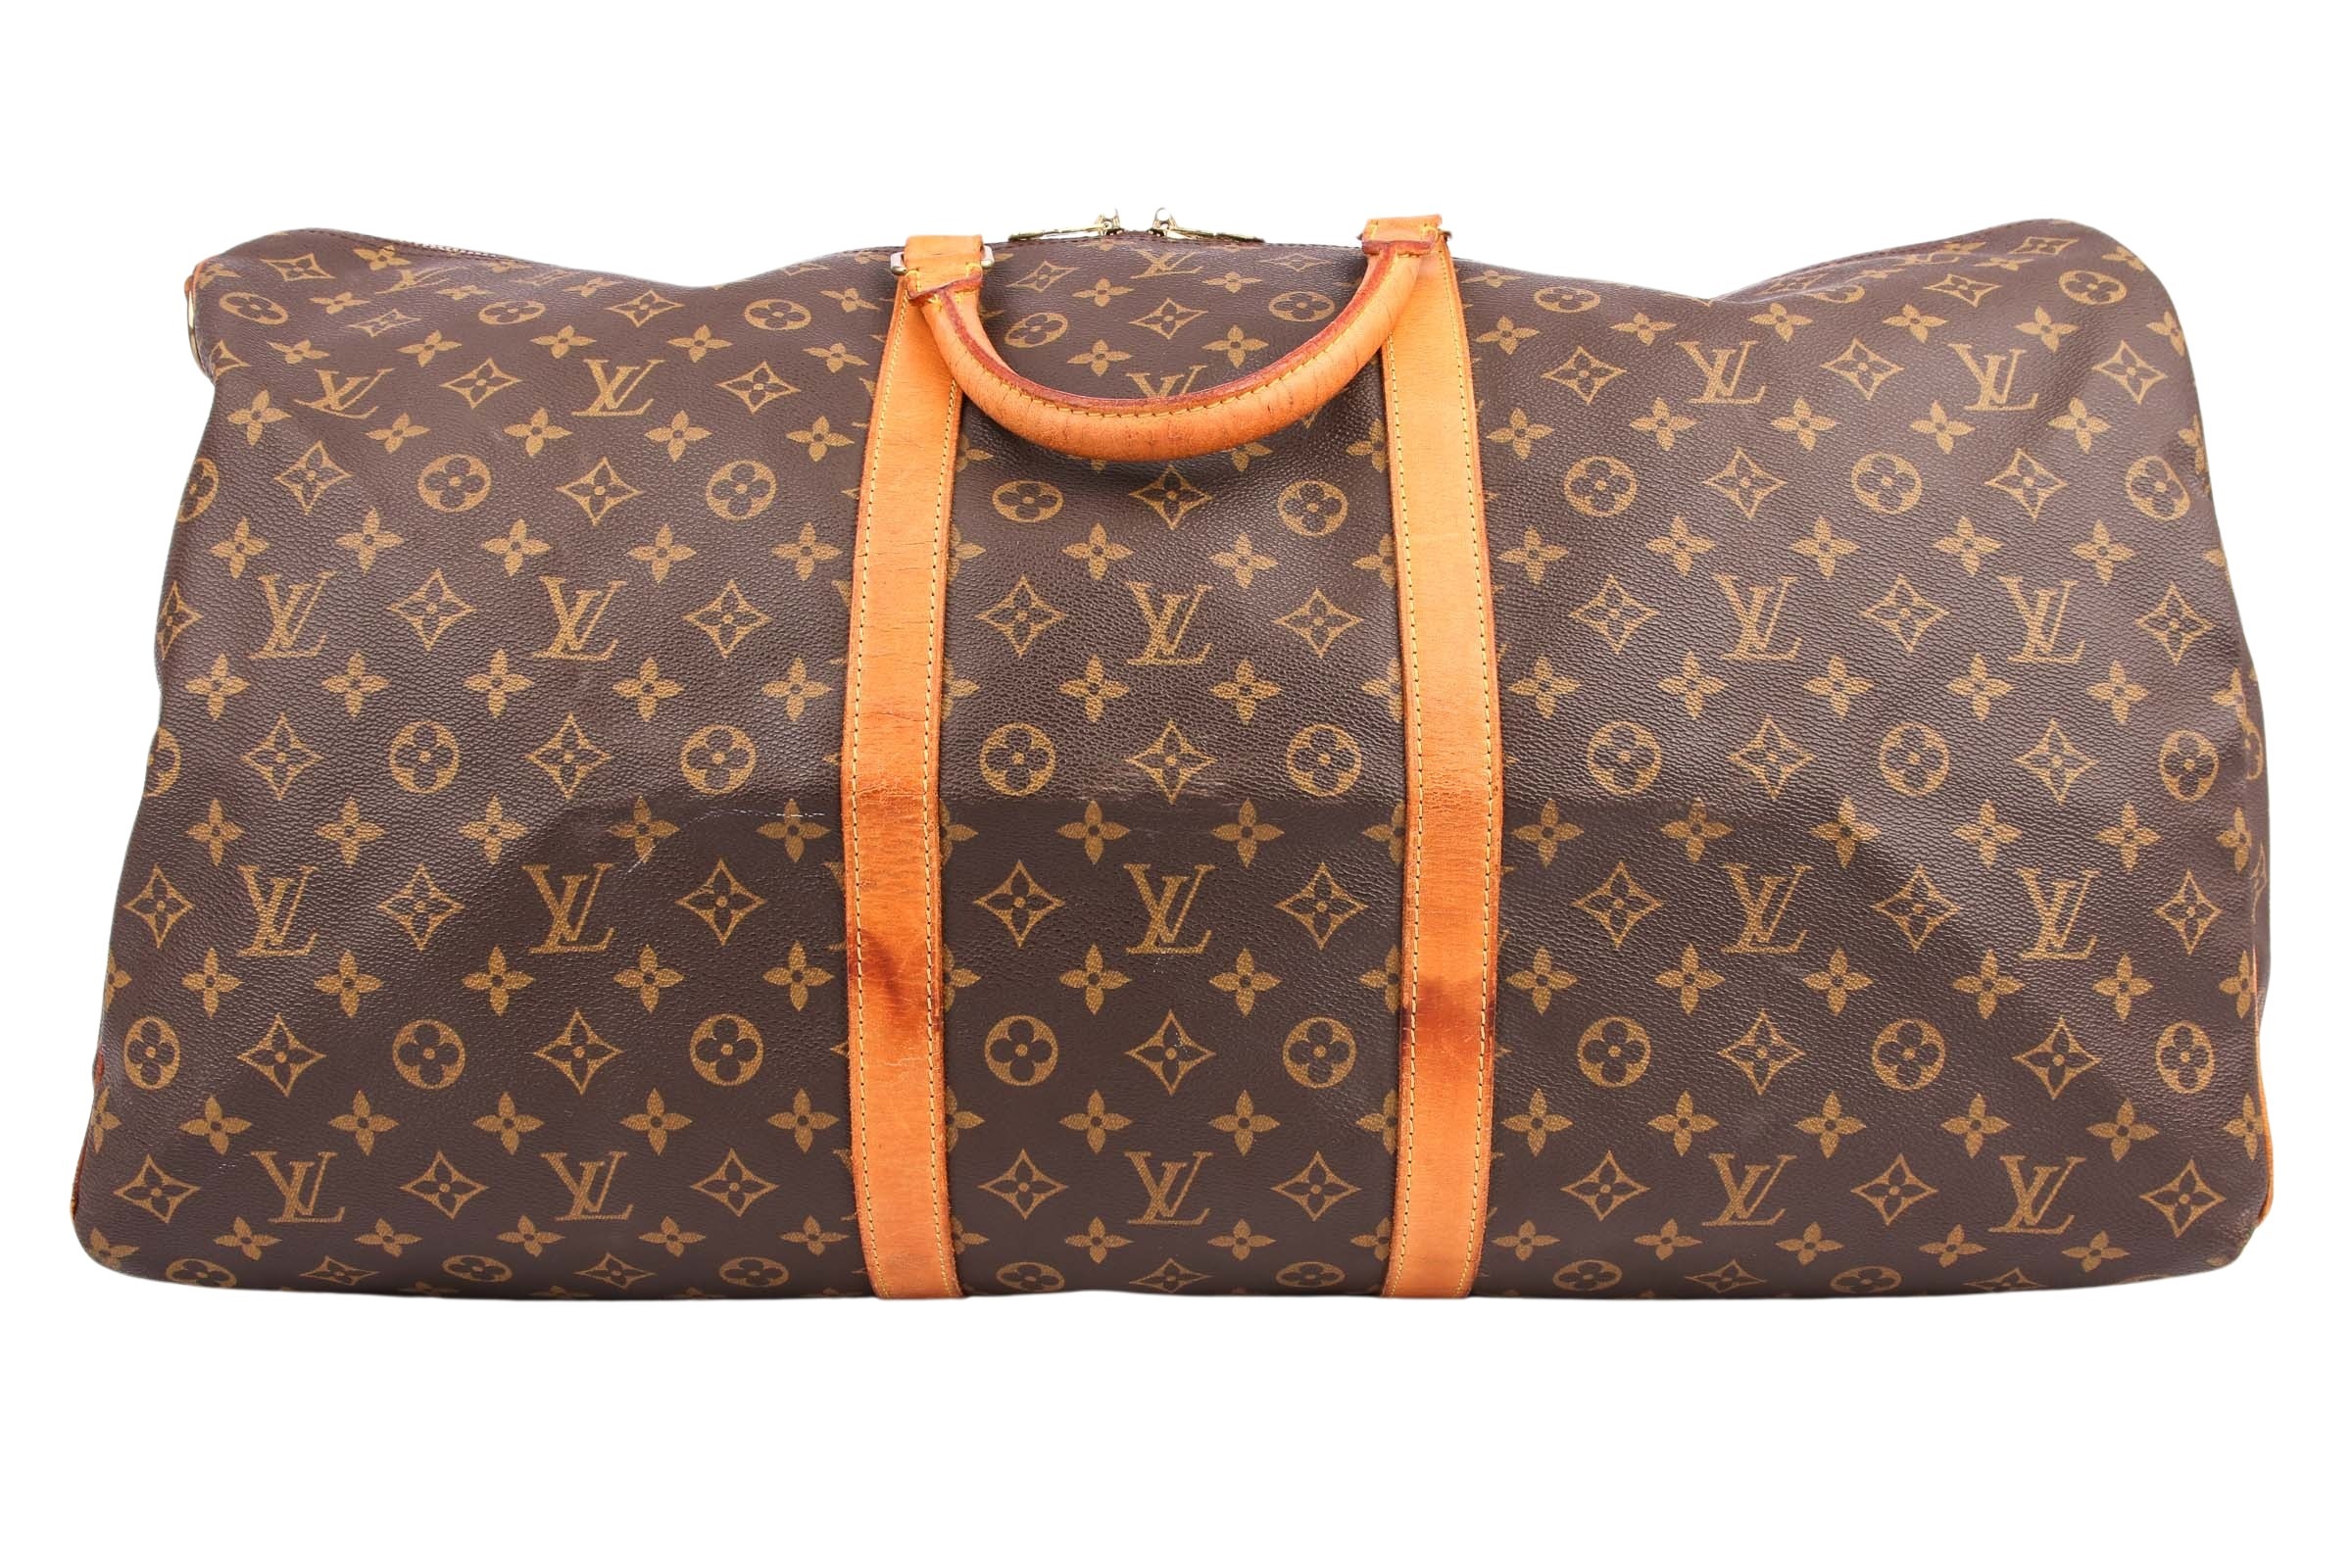 Louis Vuitton Keepall 60 Bandouliere Monogram Travel Bag